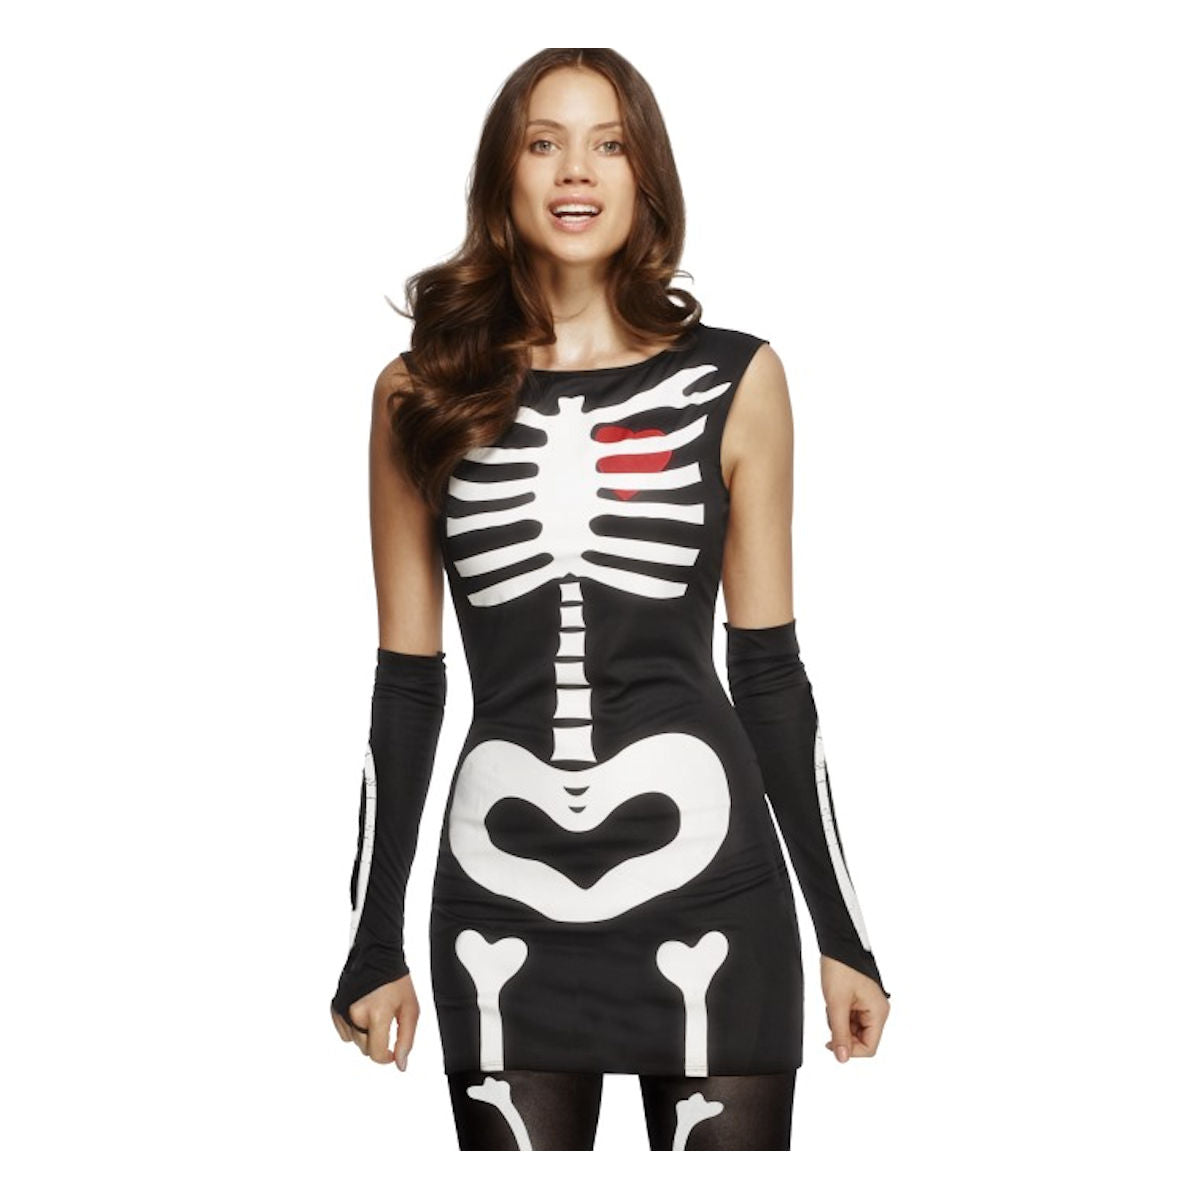 Sexy Skeleton Glow in the Dark Women's Costume